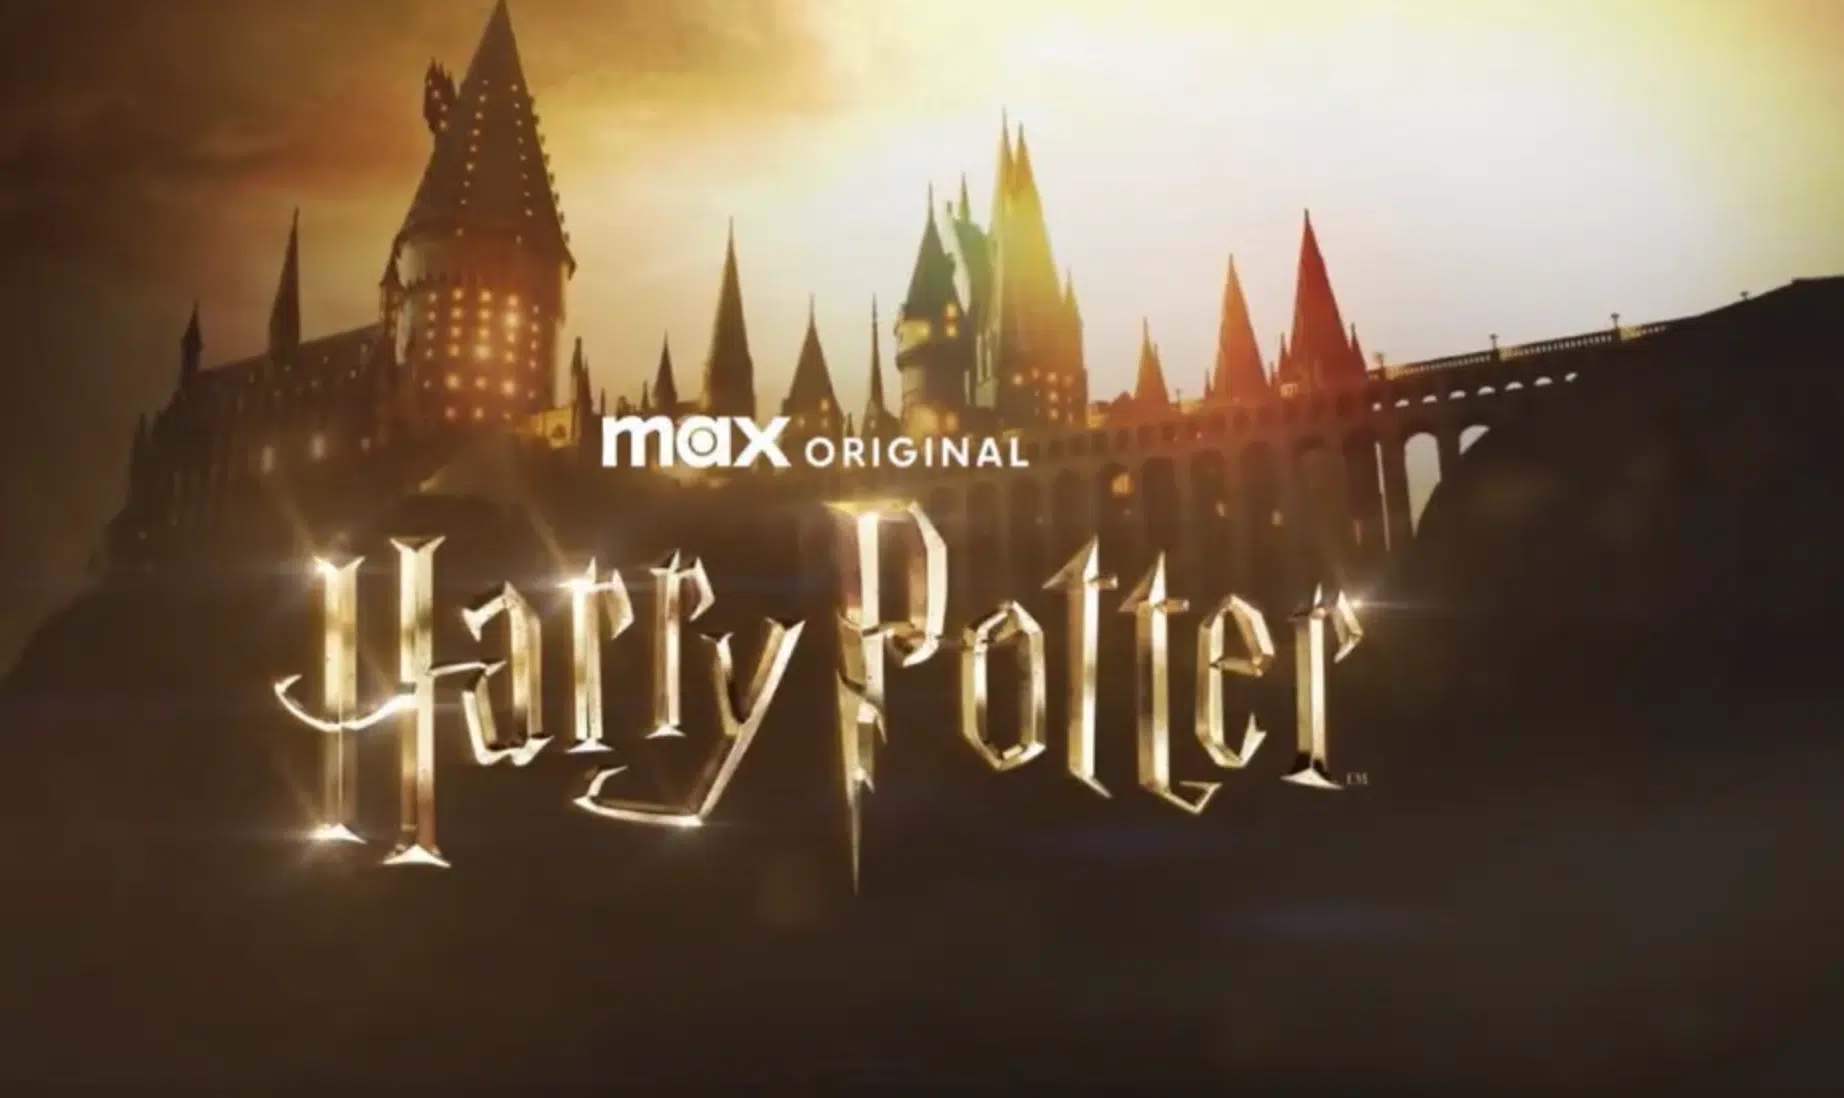 Imagen promocional del programa televisivo de Harry Potter